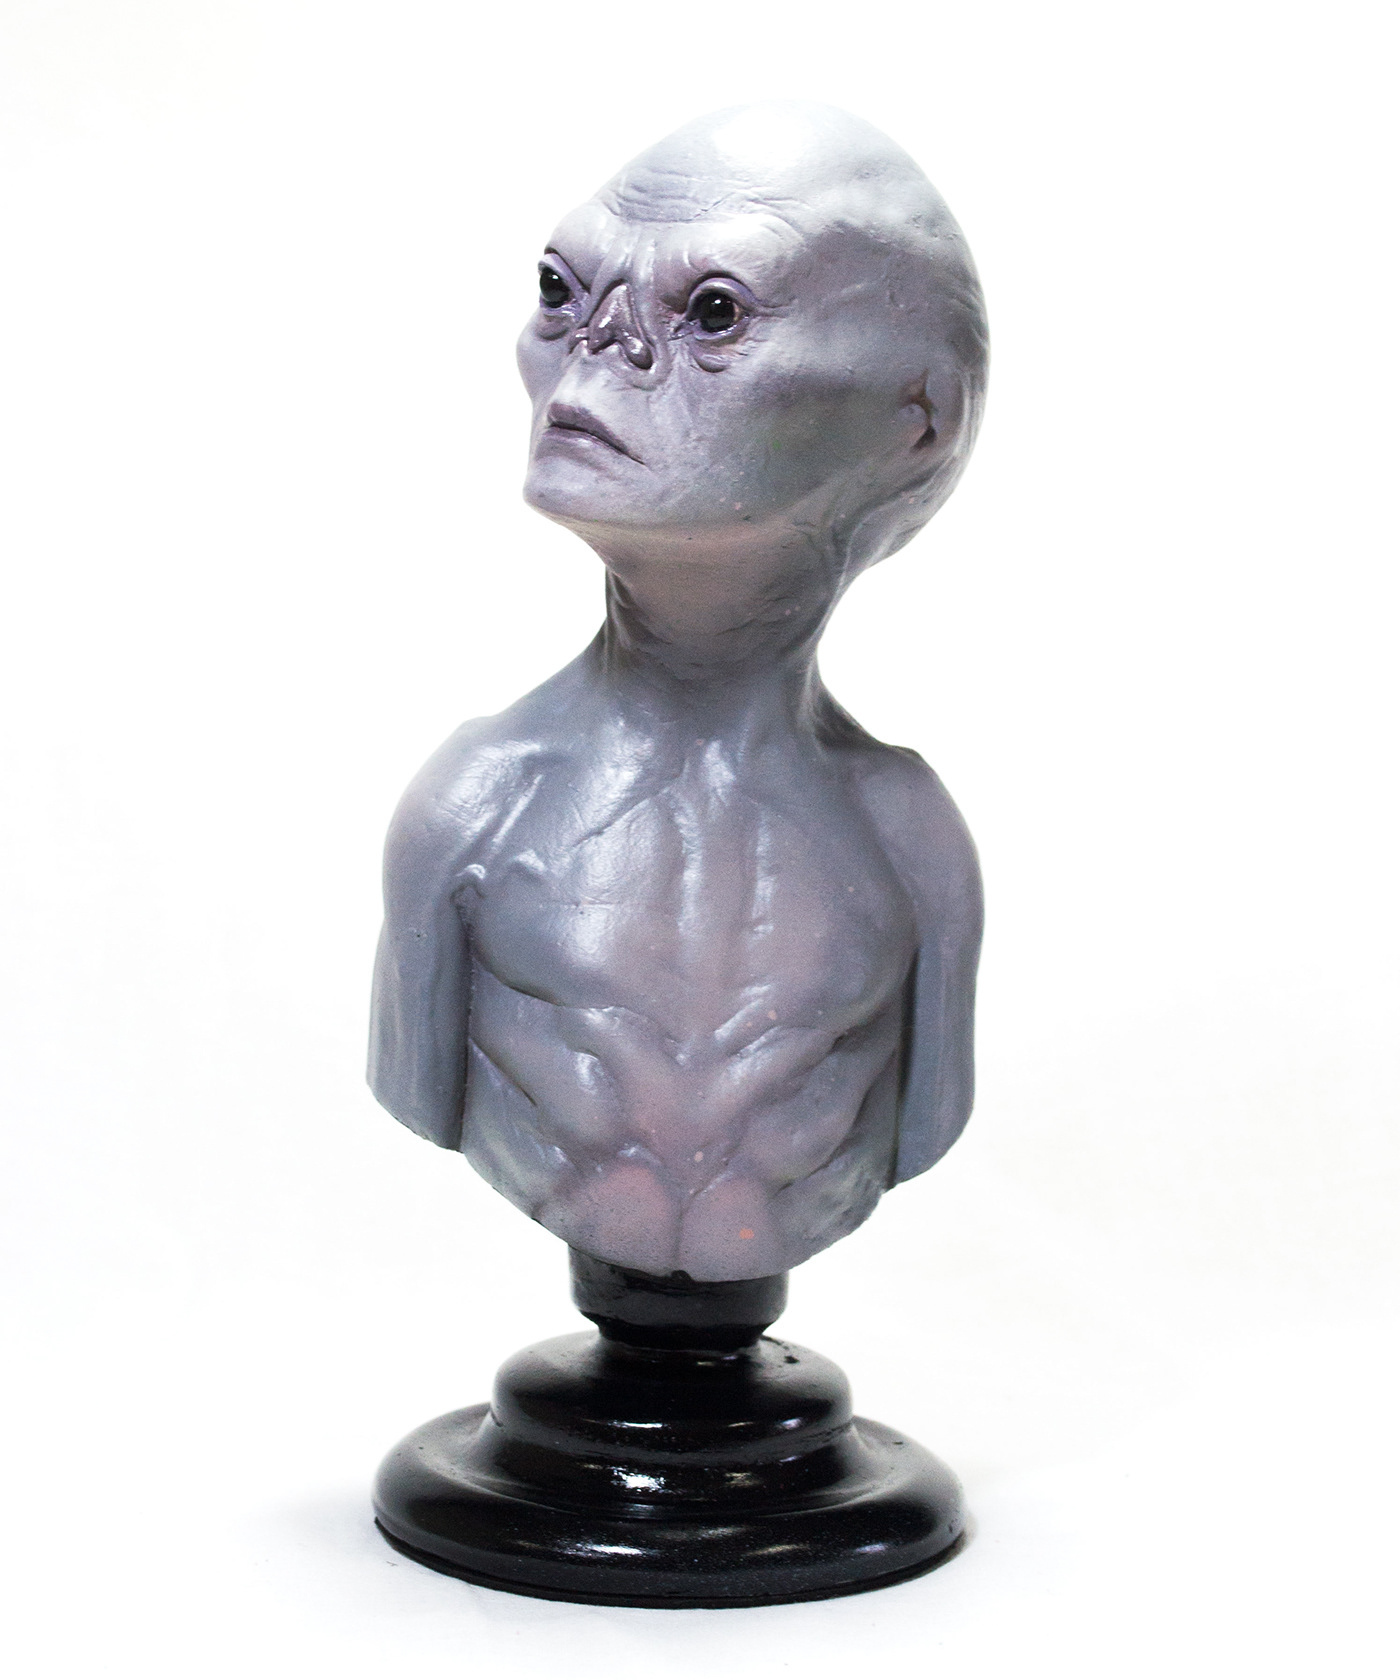 creaturedesign greyalien traditionalart estatua Escultor sculptor conceptart alien modeling Sculpt